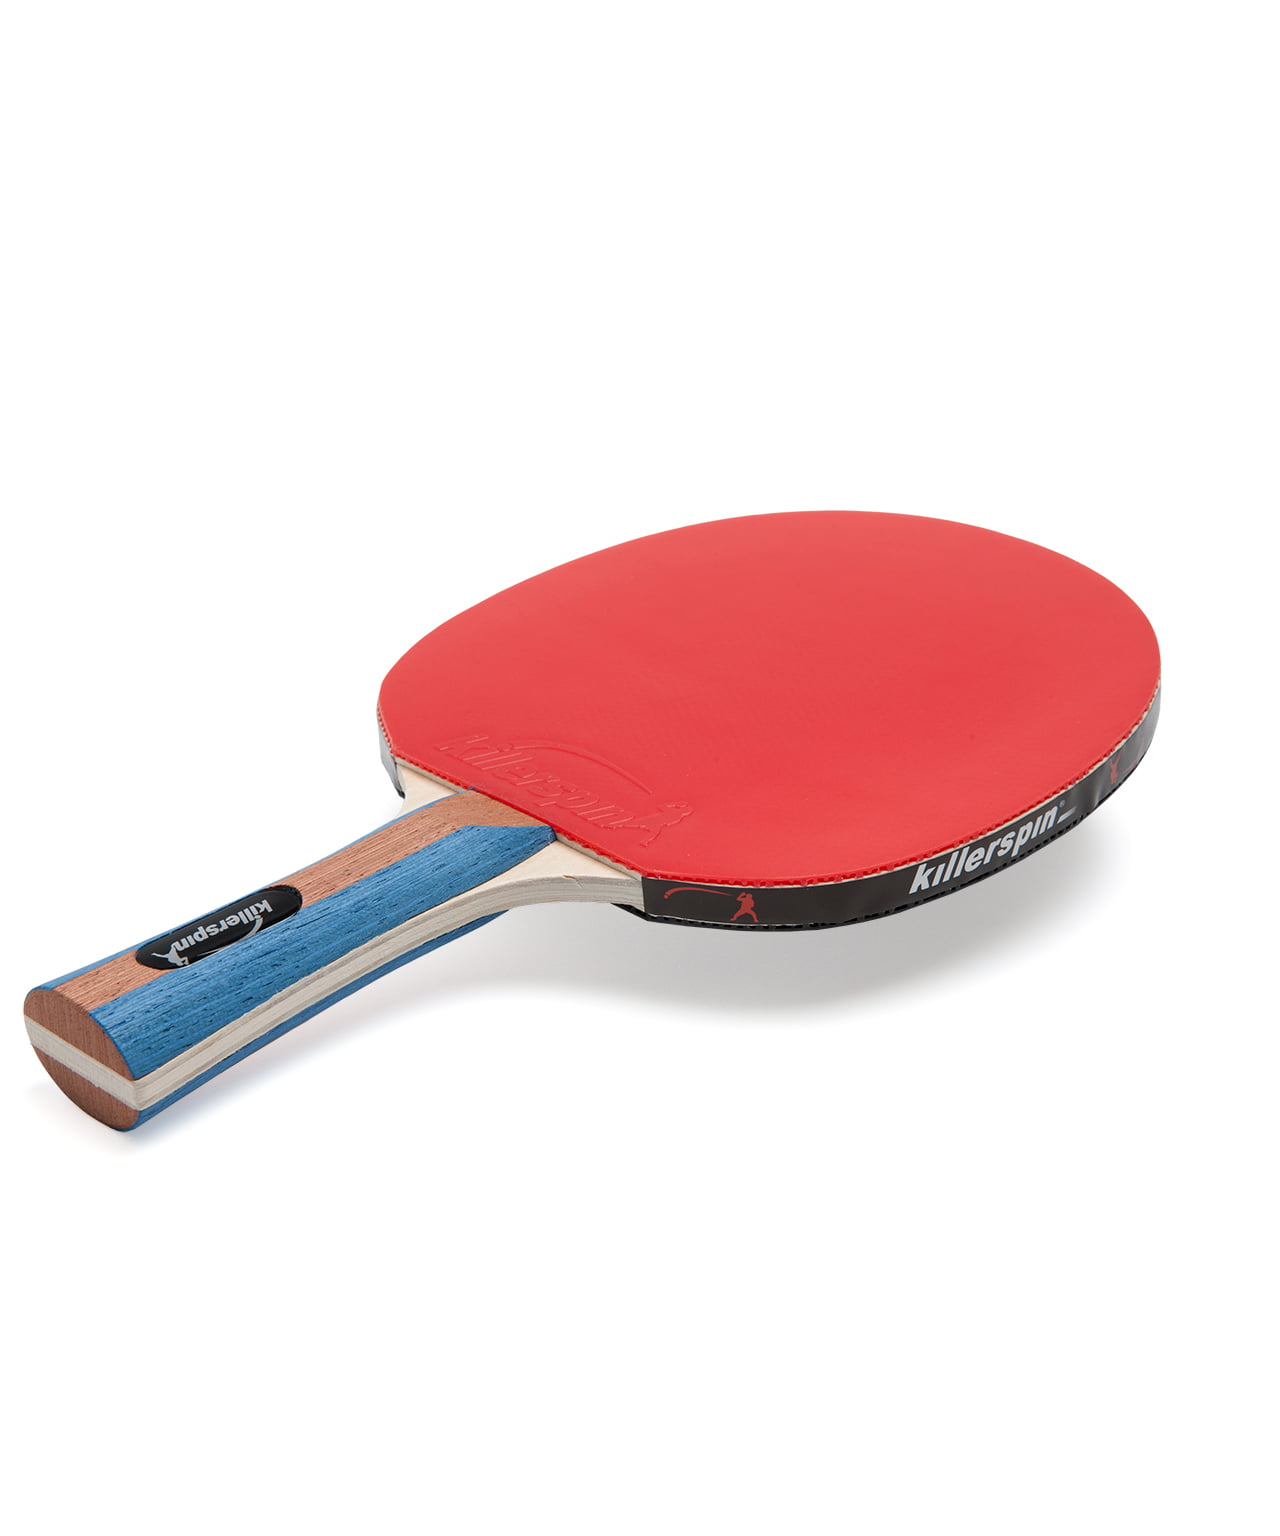 New Killerspin JETSET 4 Table Tennis Paddle Set w/ Balls Rackets Premium Quality 